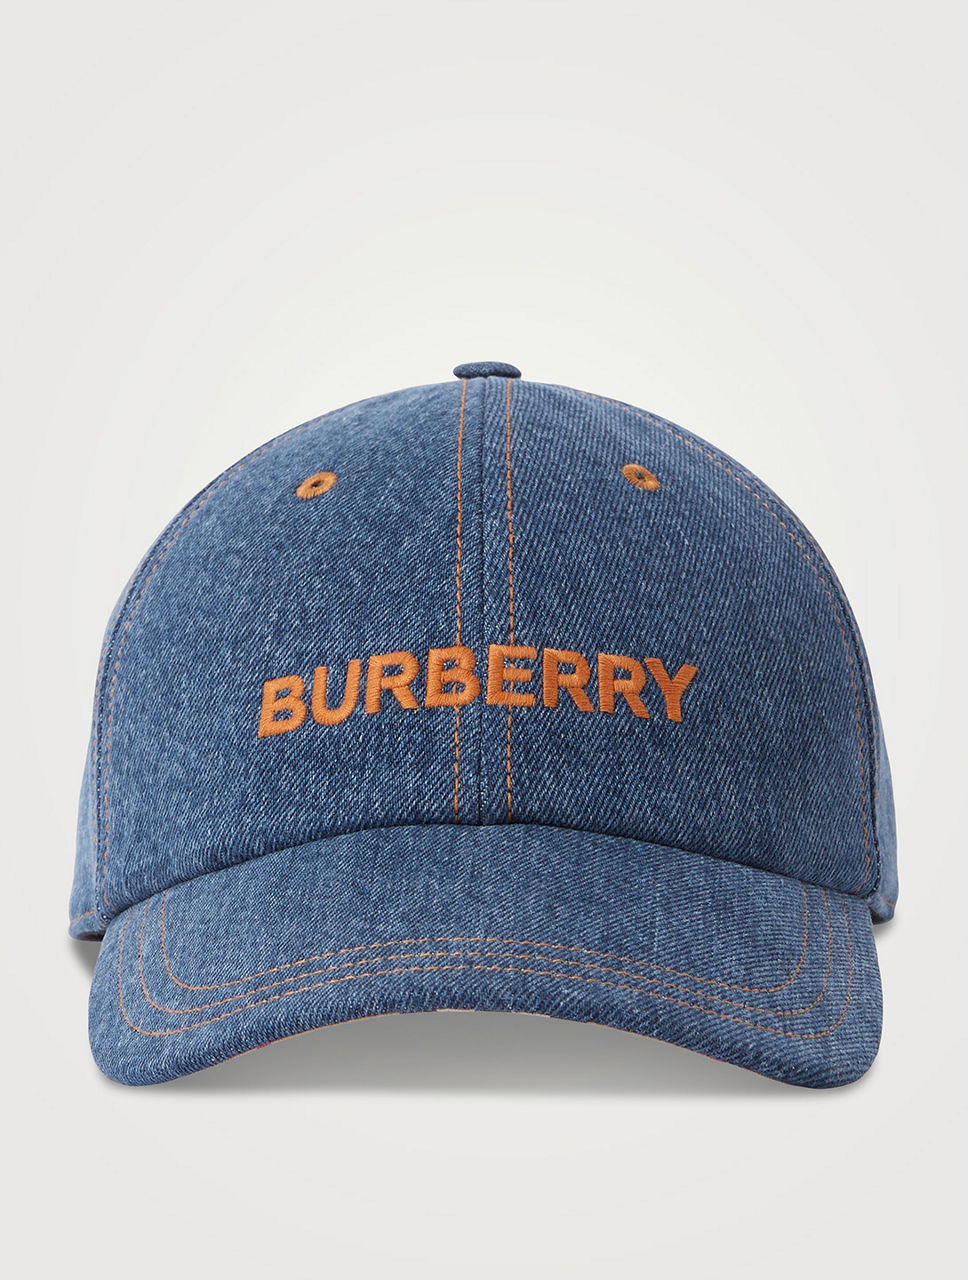 Burberry Men's Monogram Check-lined Baseball Cap - Cool Denim Blue - Size XL